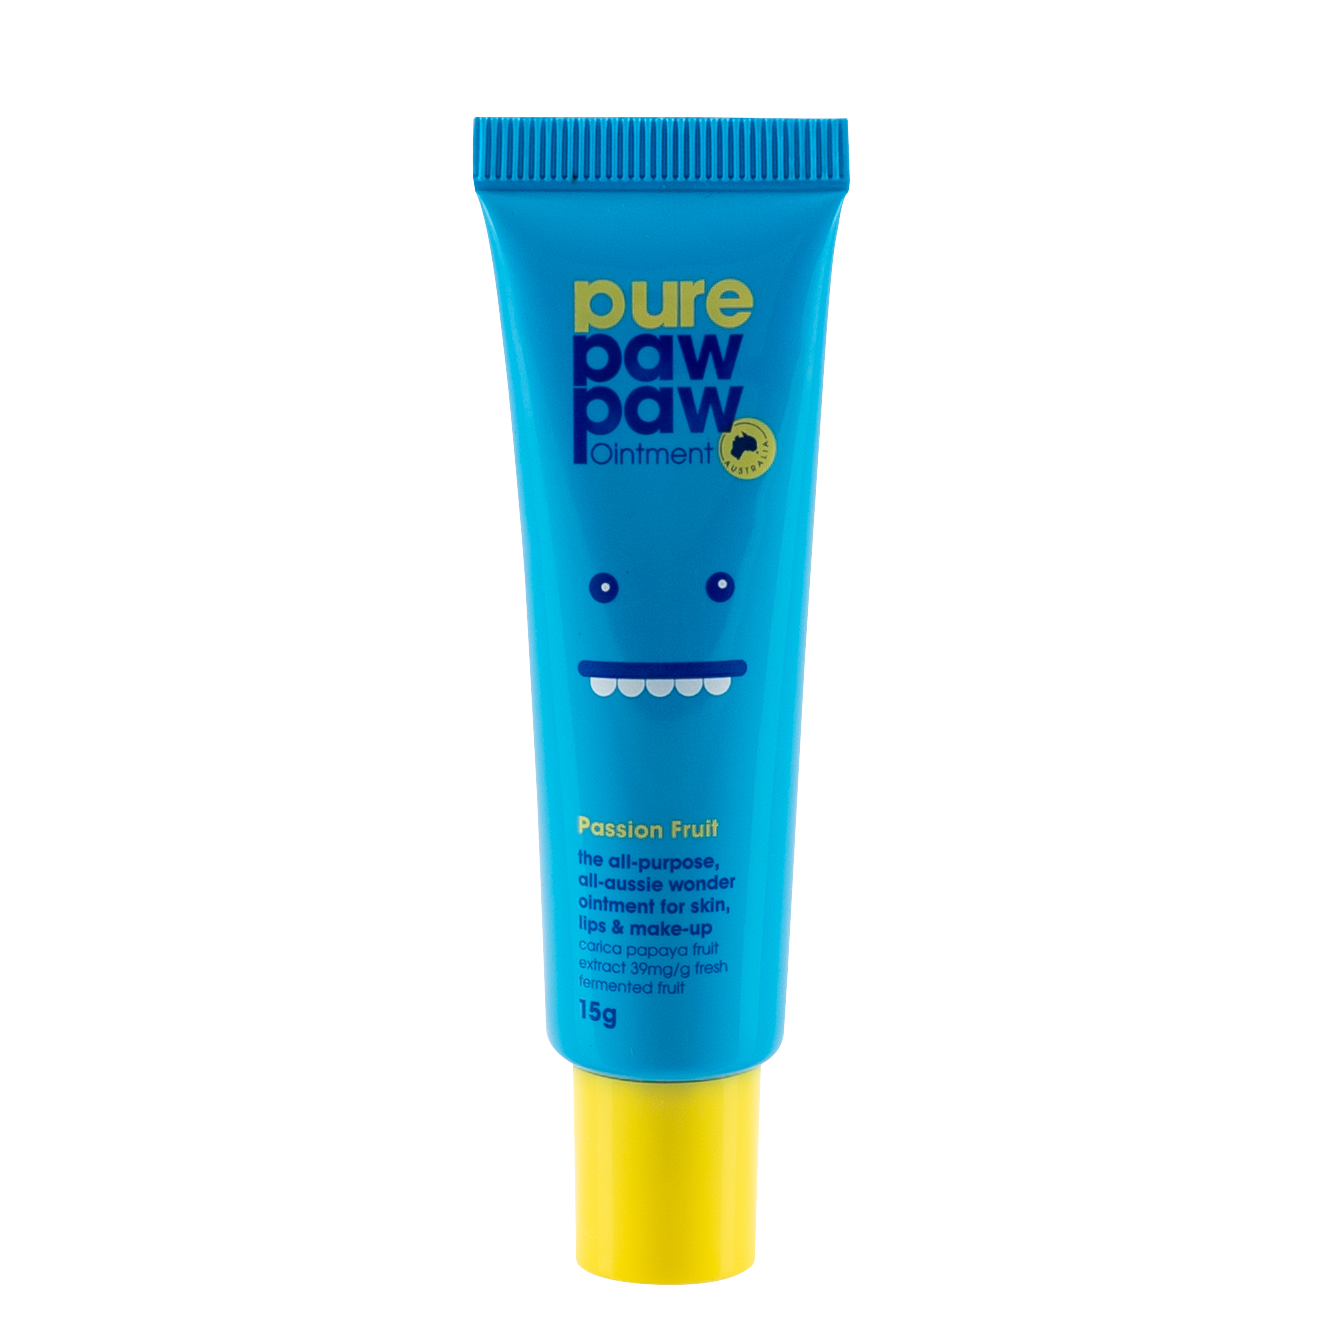 Pure Paw Paw Ointment Passionfruit 15g - интернет-магазин профессиональной косметики Spadream, изображение 41027